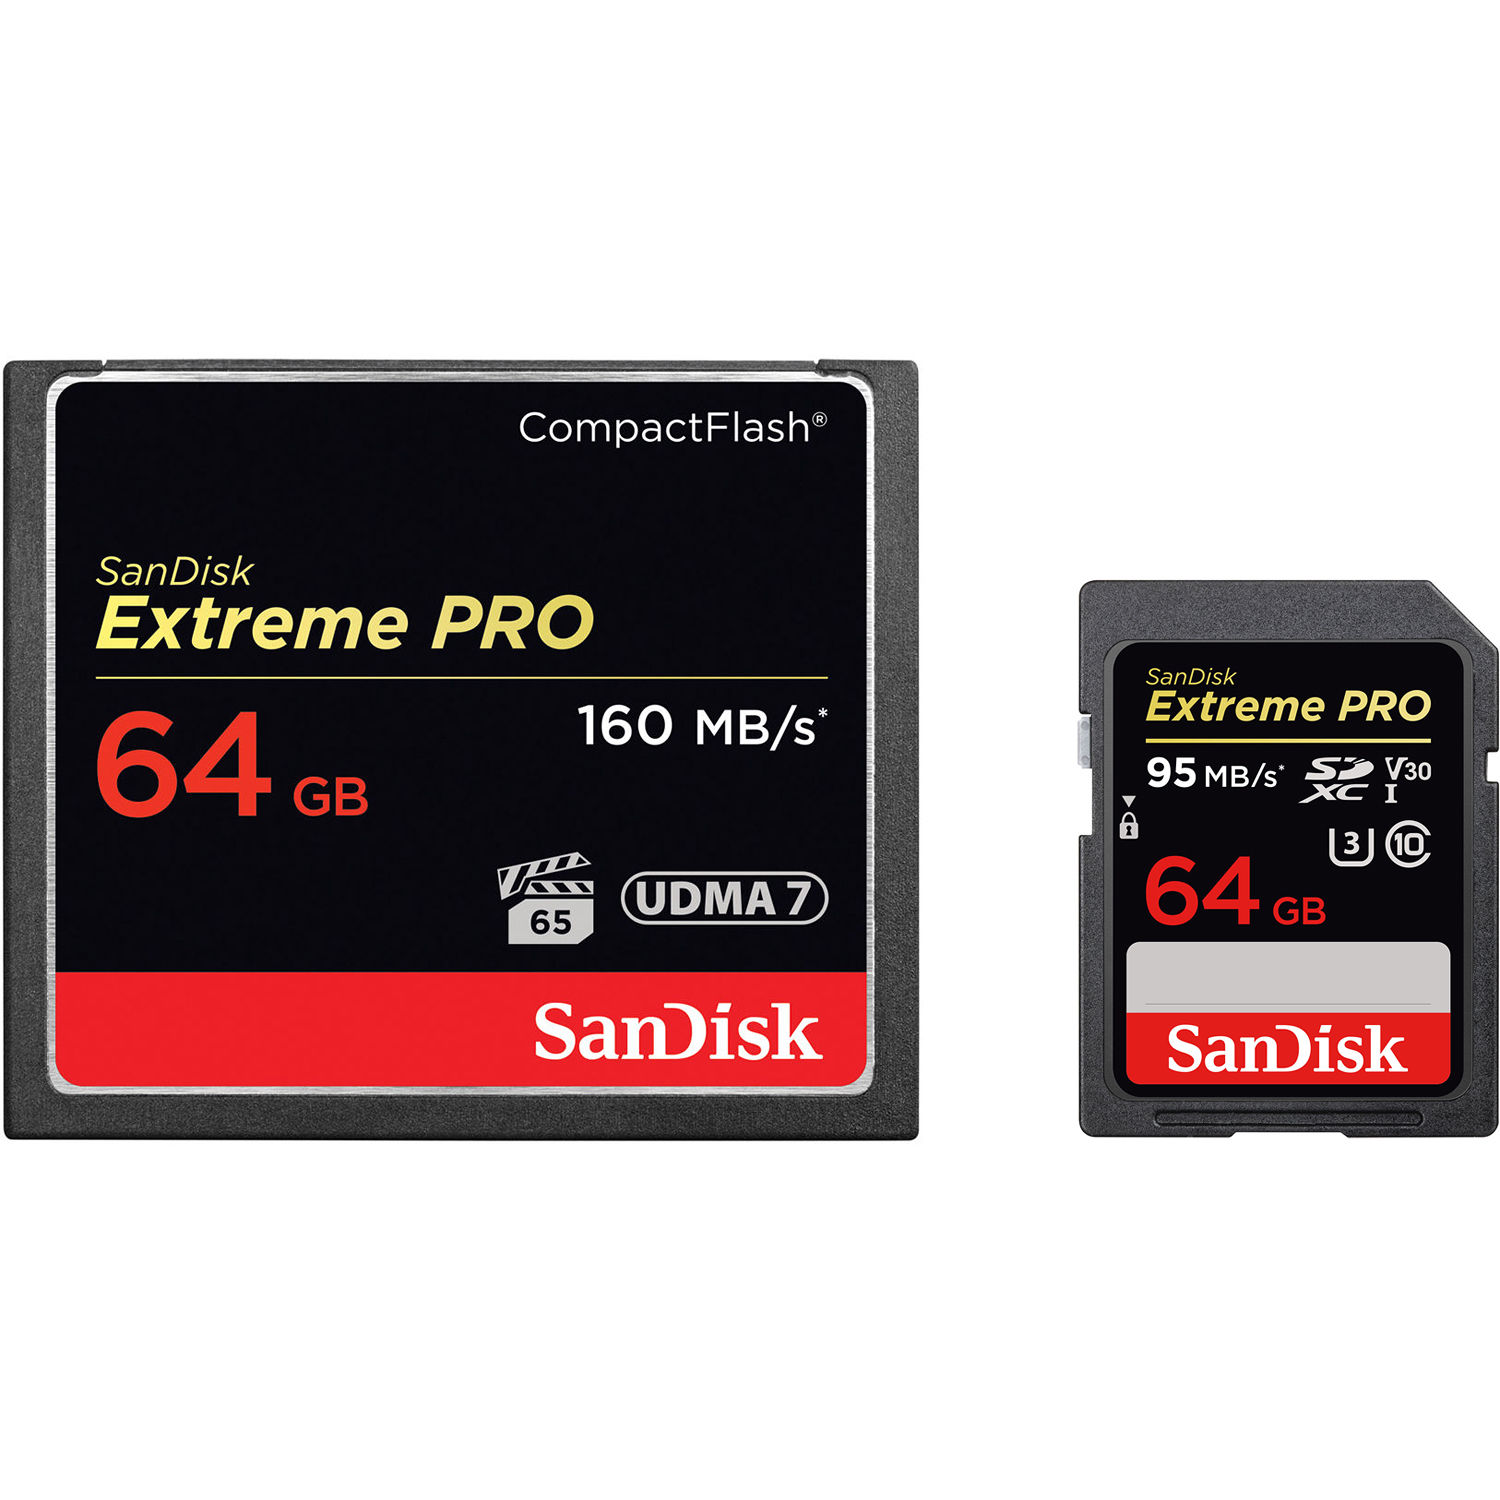 SanDisk 64GB Extreme PRO CompactFlash & 64GB Extreme PRO B&H